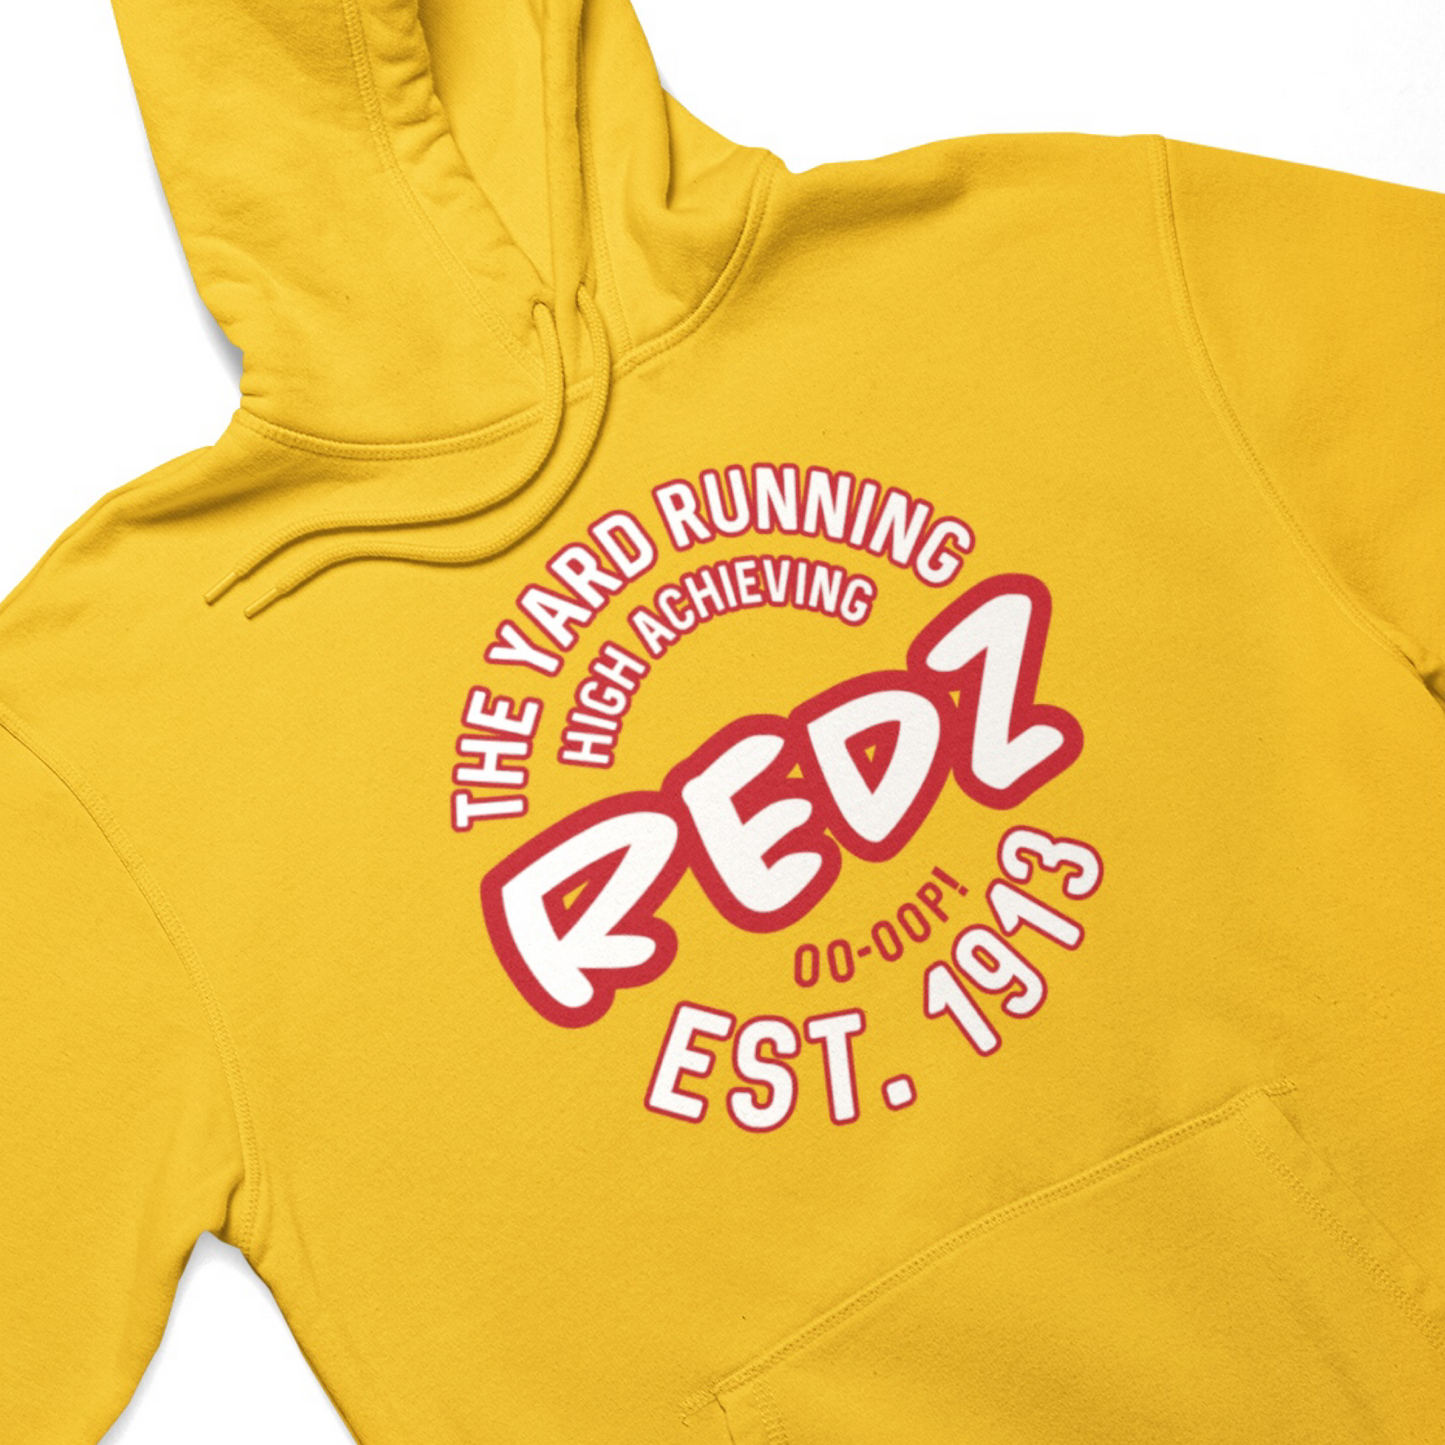 Yard Running Redz - Multiple Garment Colors